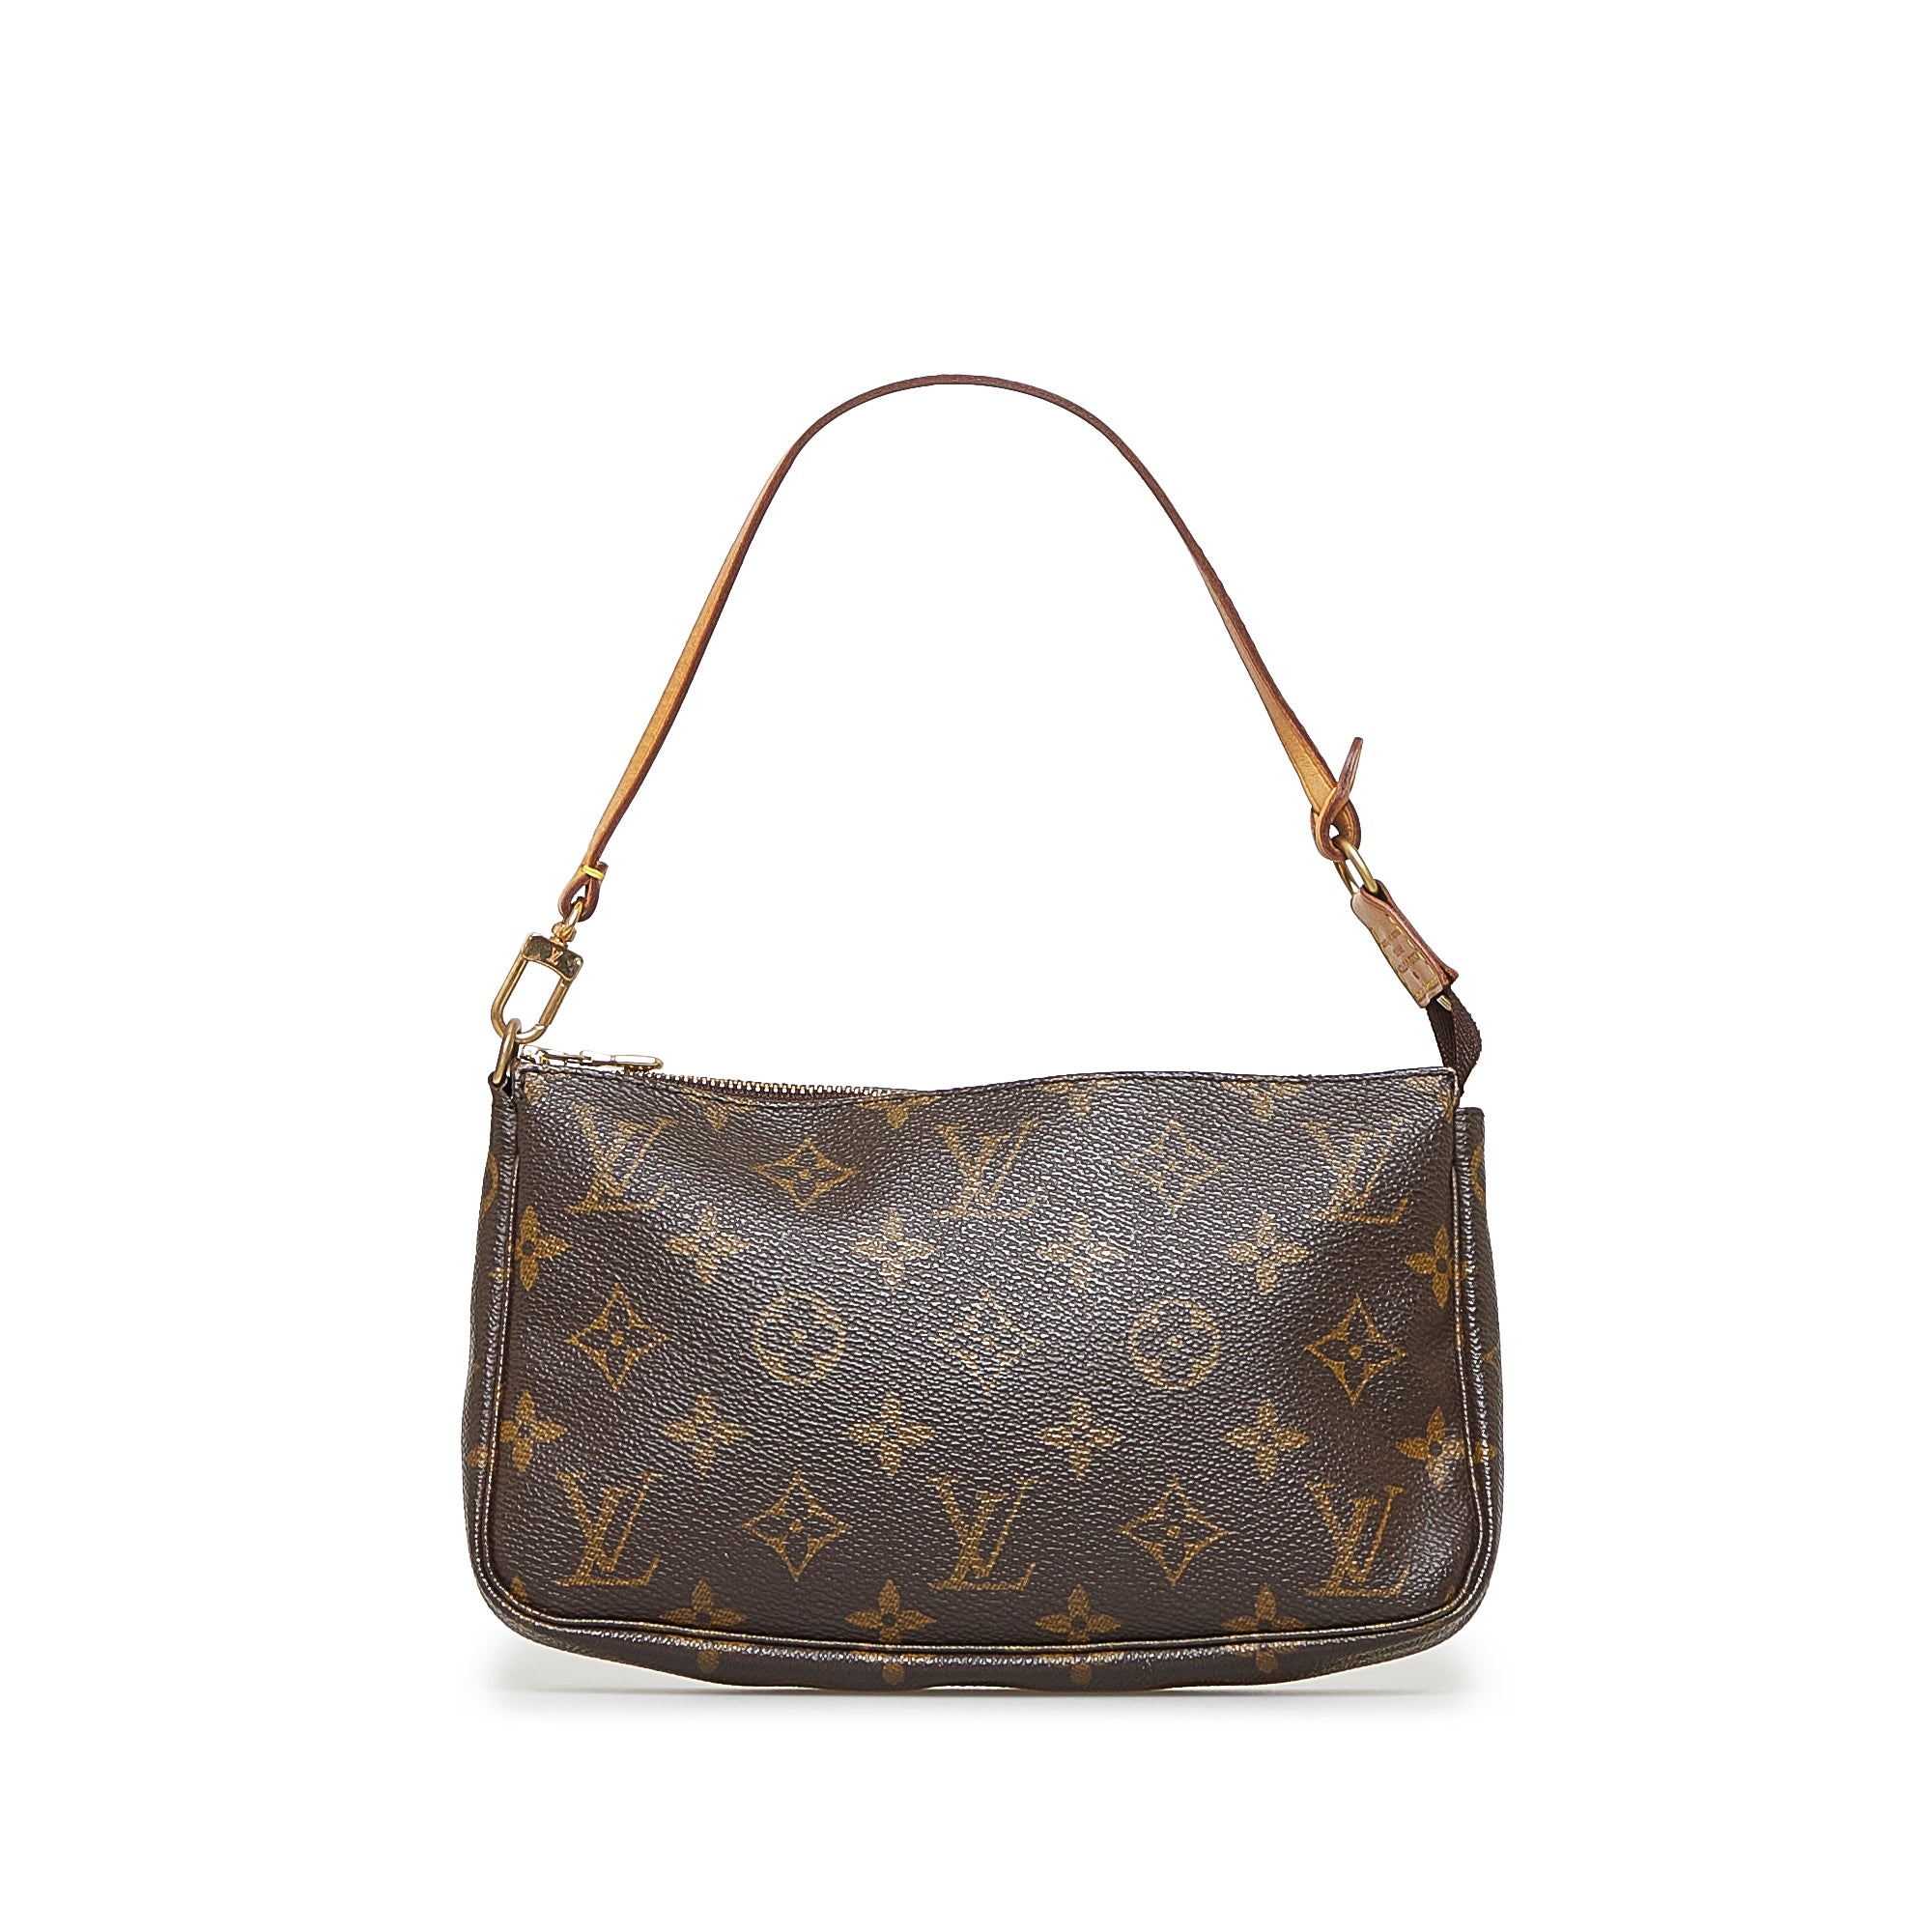 Louis Vuitton - Authenticated Pochette Accessoire Handbag - Leather Brown for Women, Very Good Condition